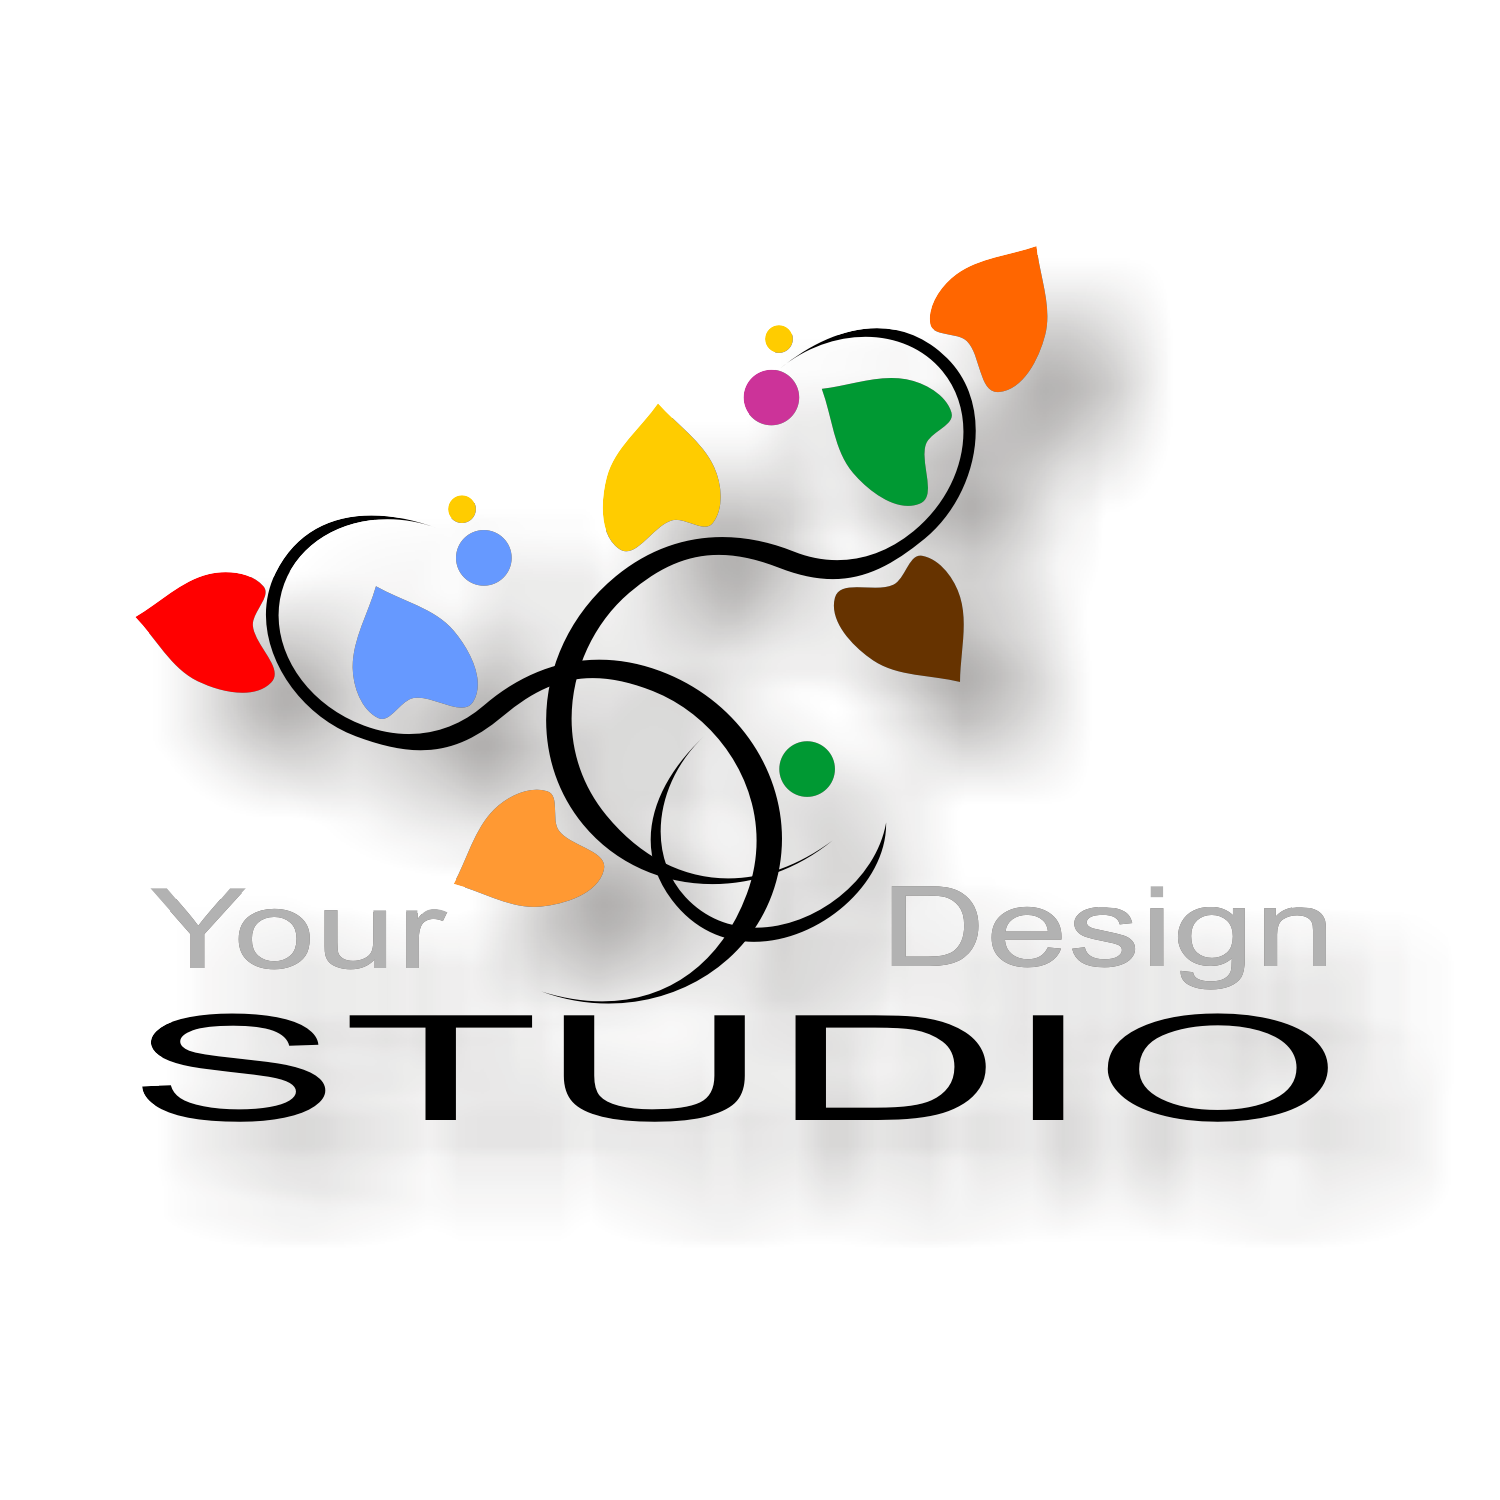 11 bit studios logo in transparent PNG and vectorized SVG formats